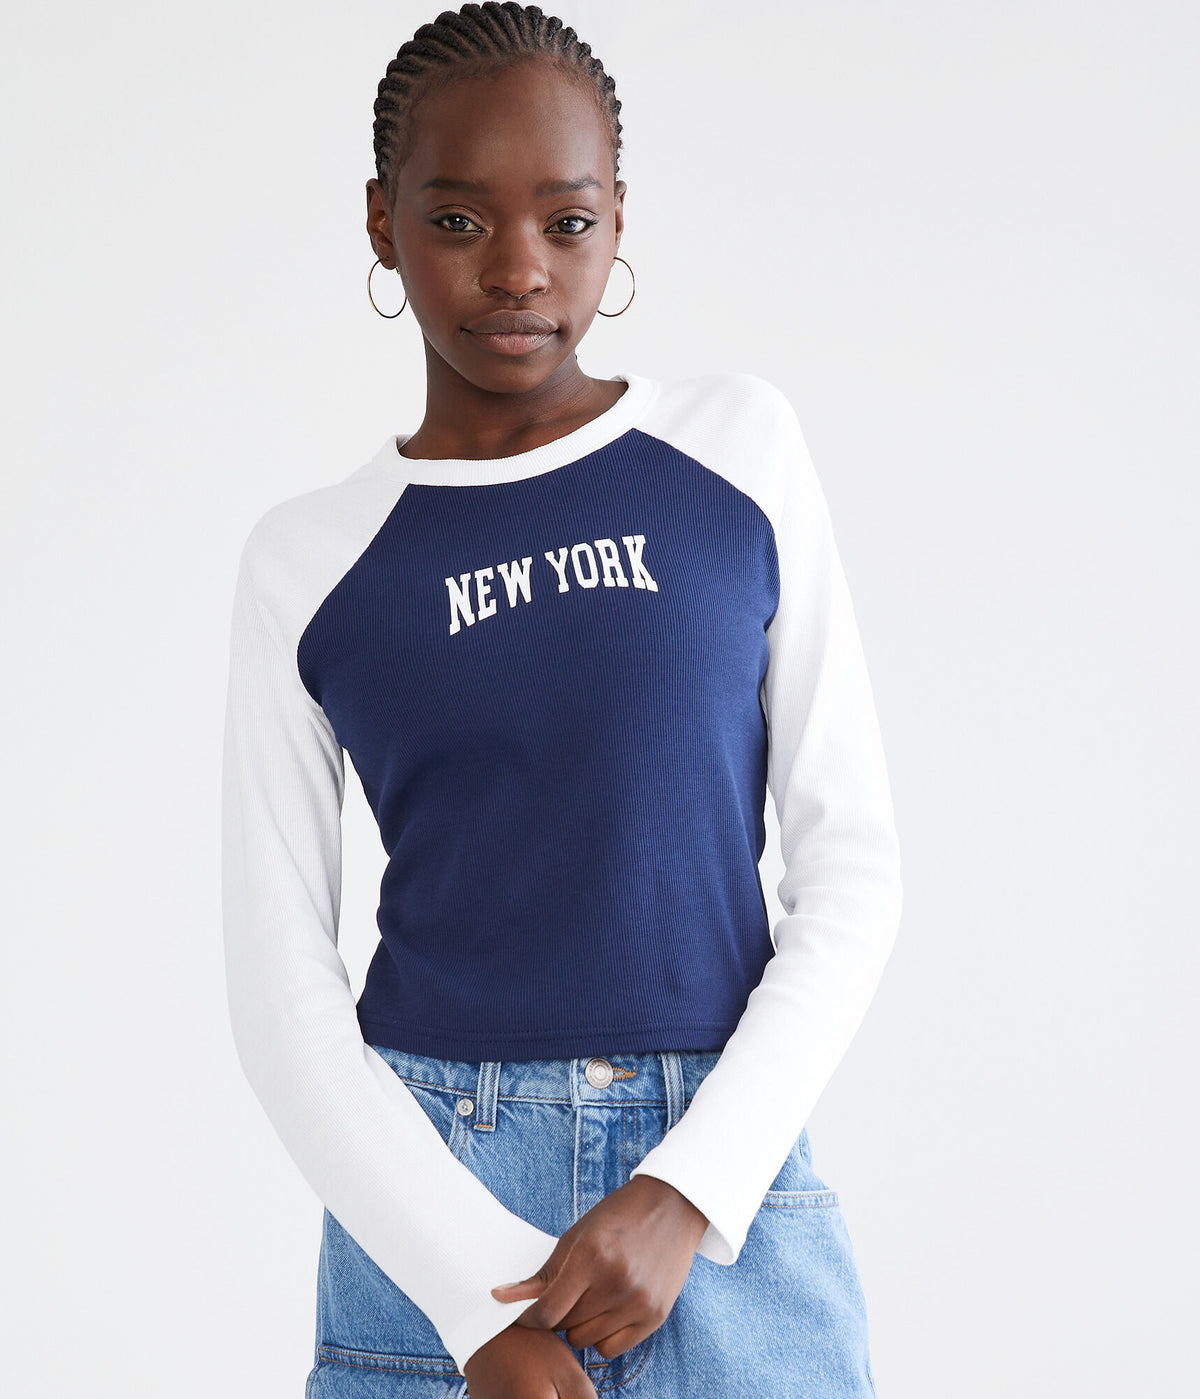 Aeropostale Womens' Long Sleeve New York Raglan Graphic Tee - Navy Blue - Size XXL - Cotton - Teen Fashion & Clothing Naval Blue